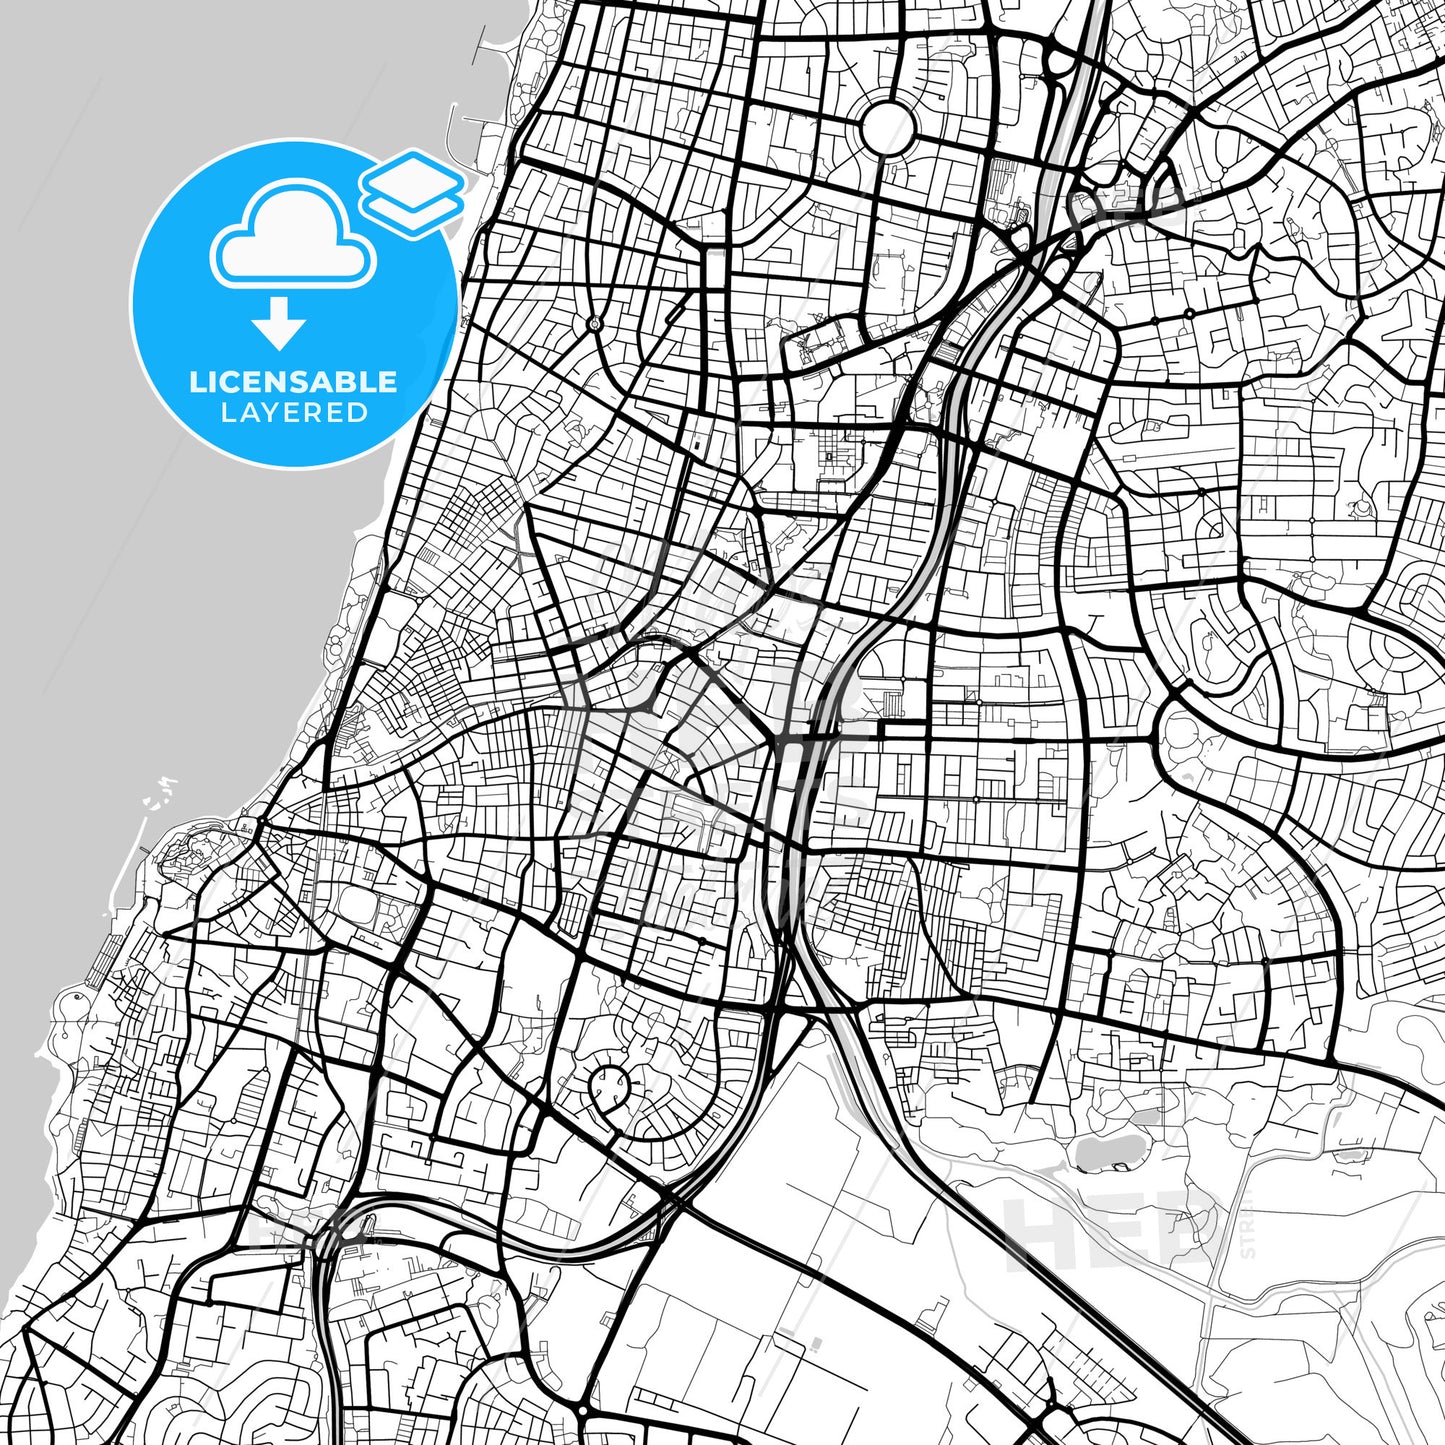 Layered PDF map of Bnei Brak, Tel Aviv, Israel